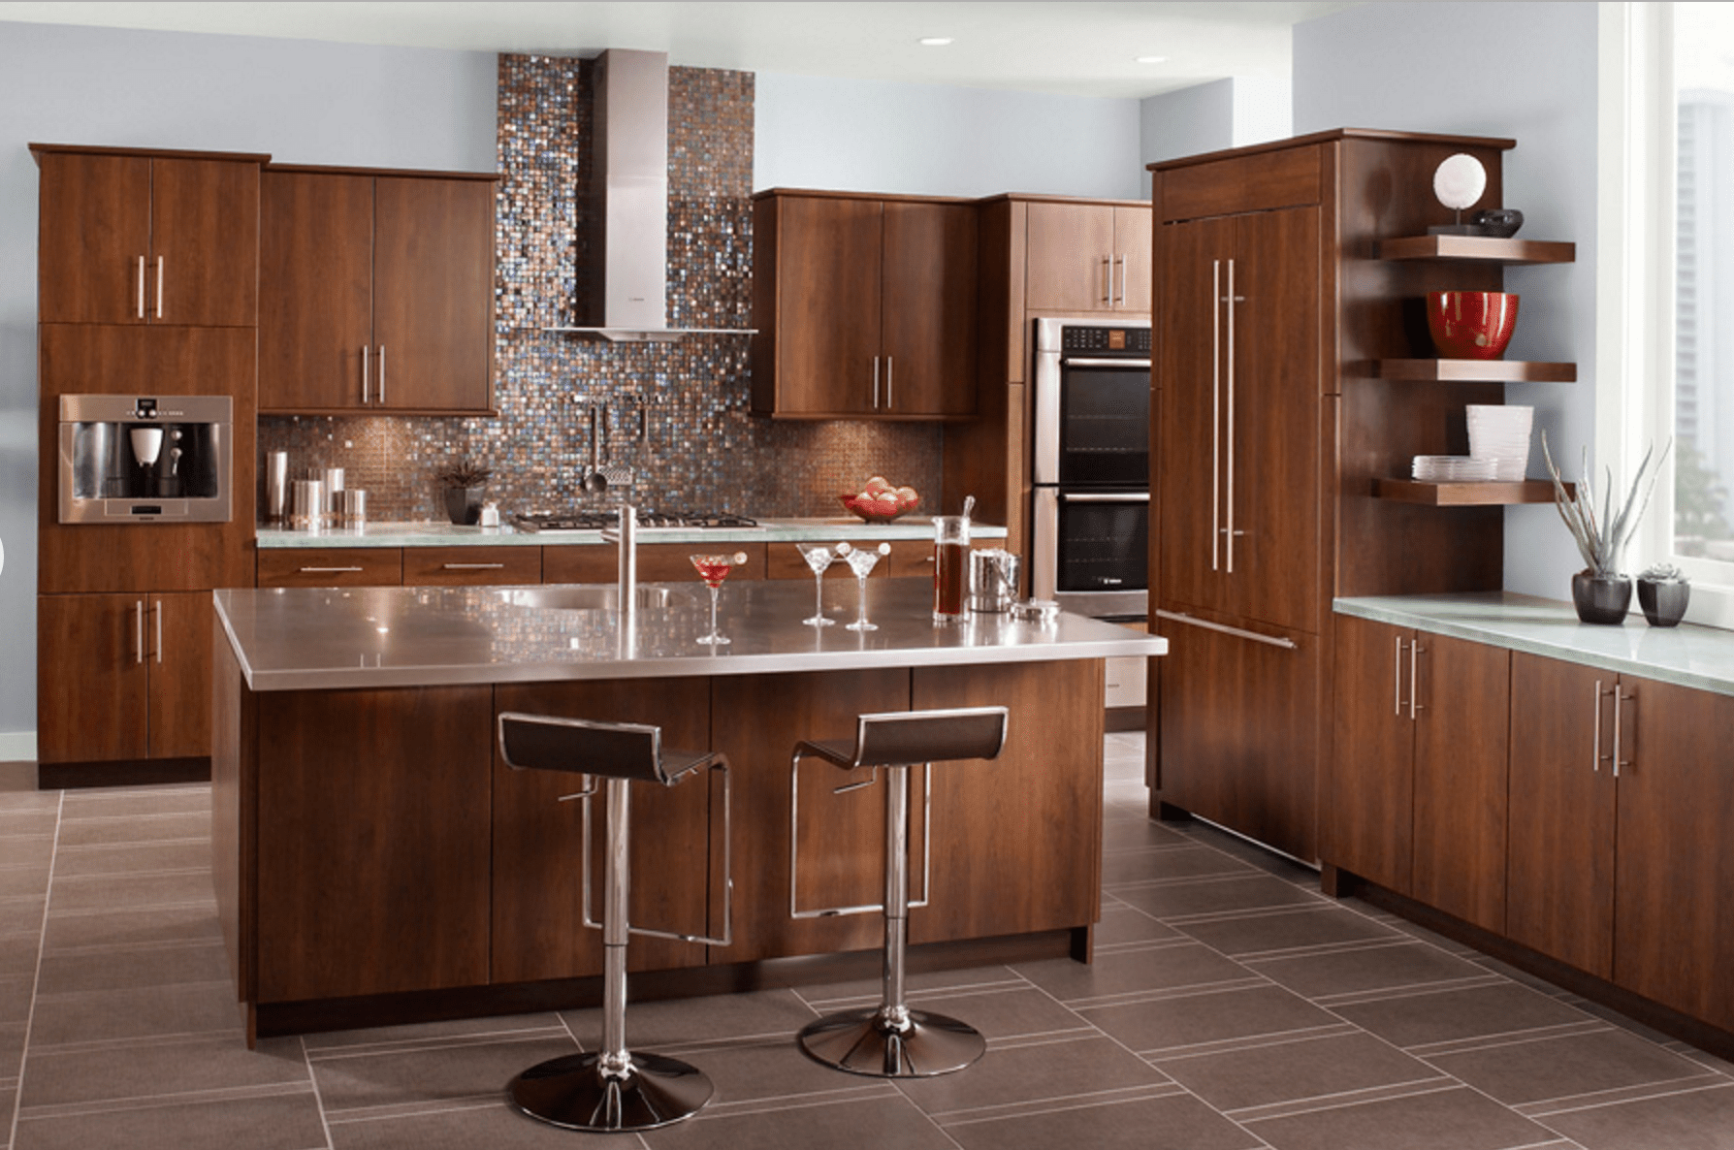 3 Inspiring Gray Kitchen Design Ideas - gray and brown kitchen ideas